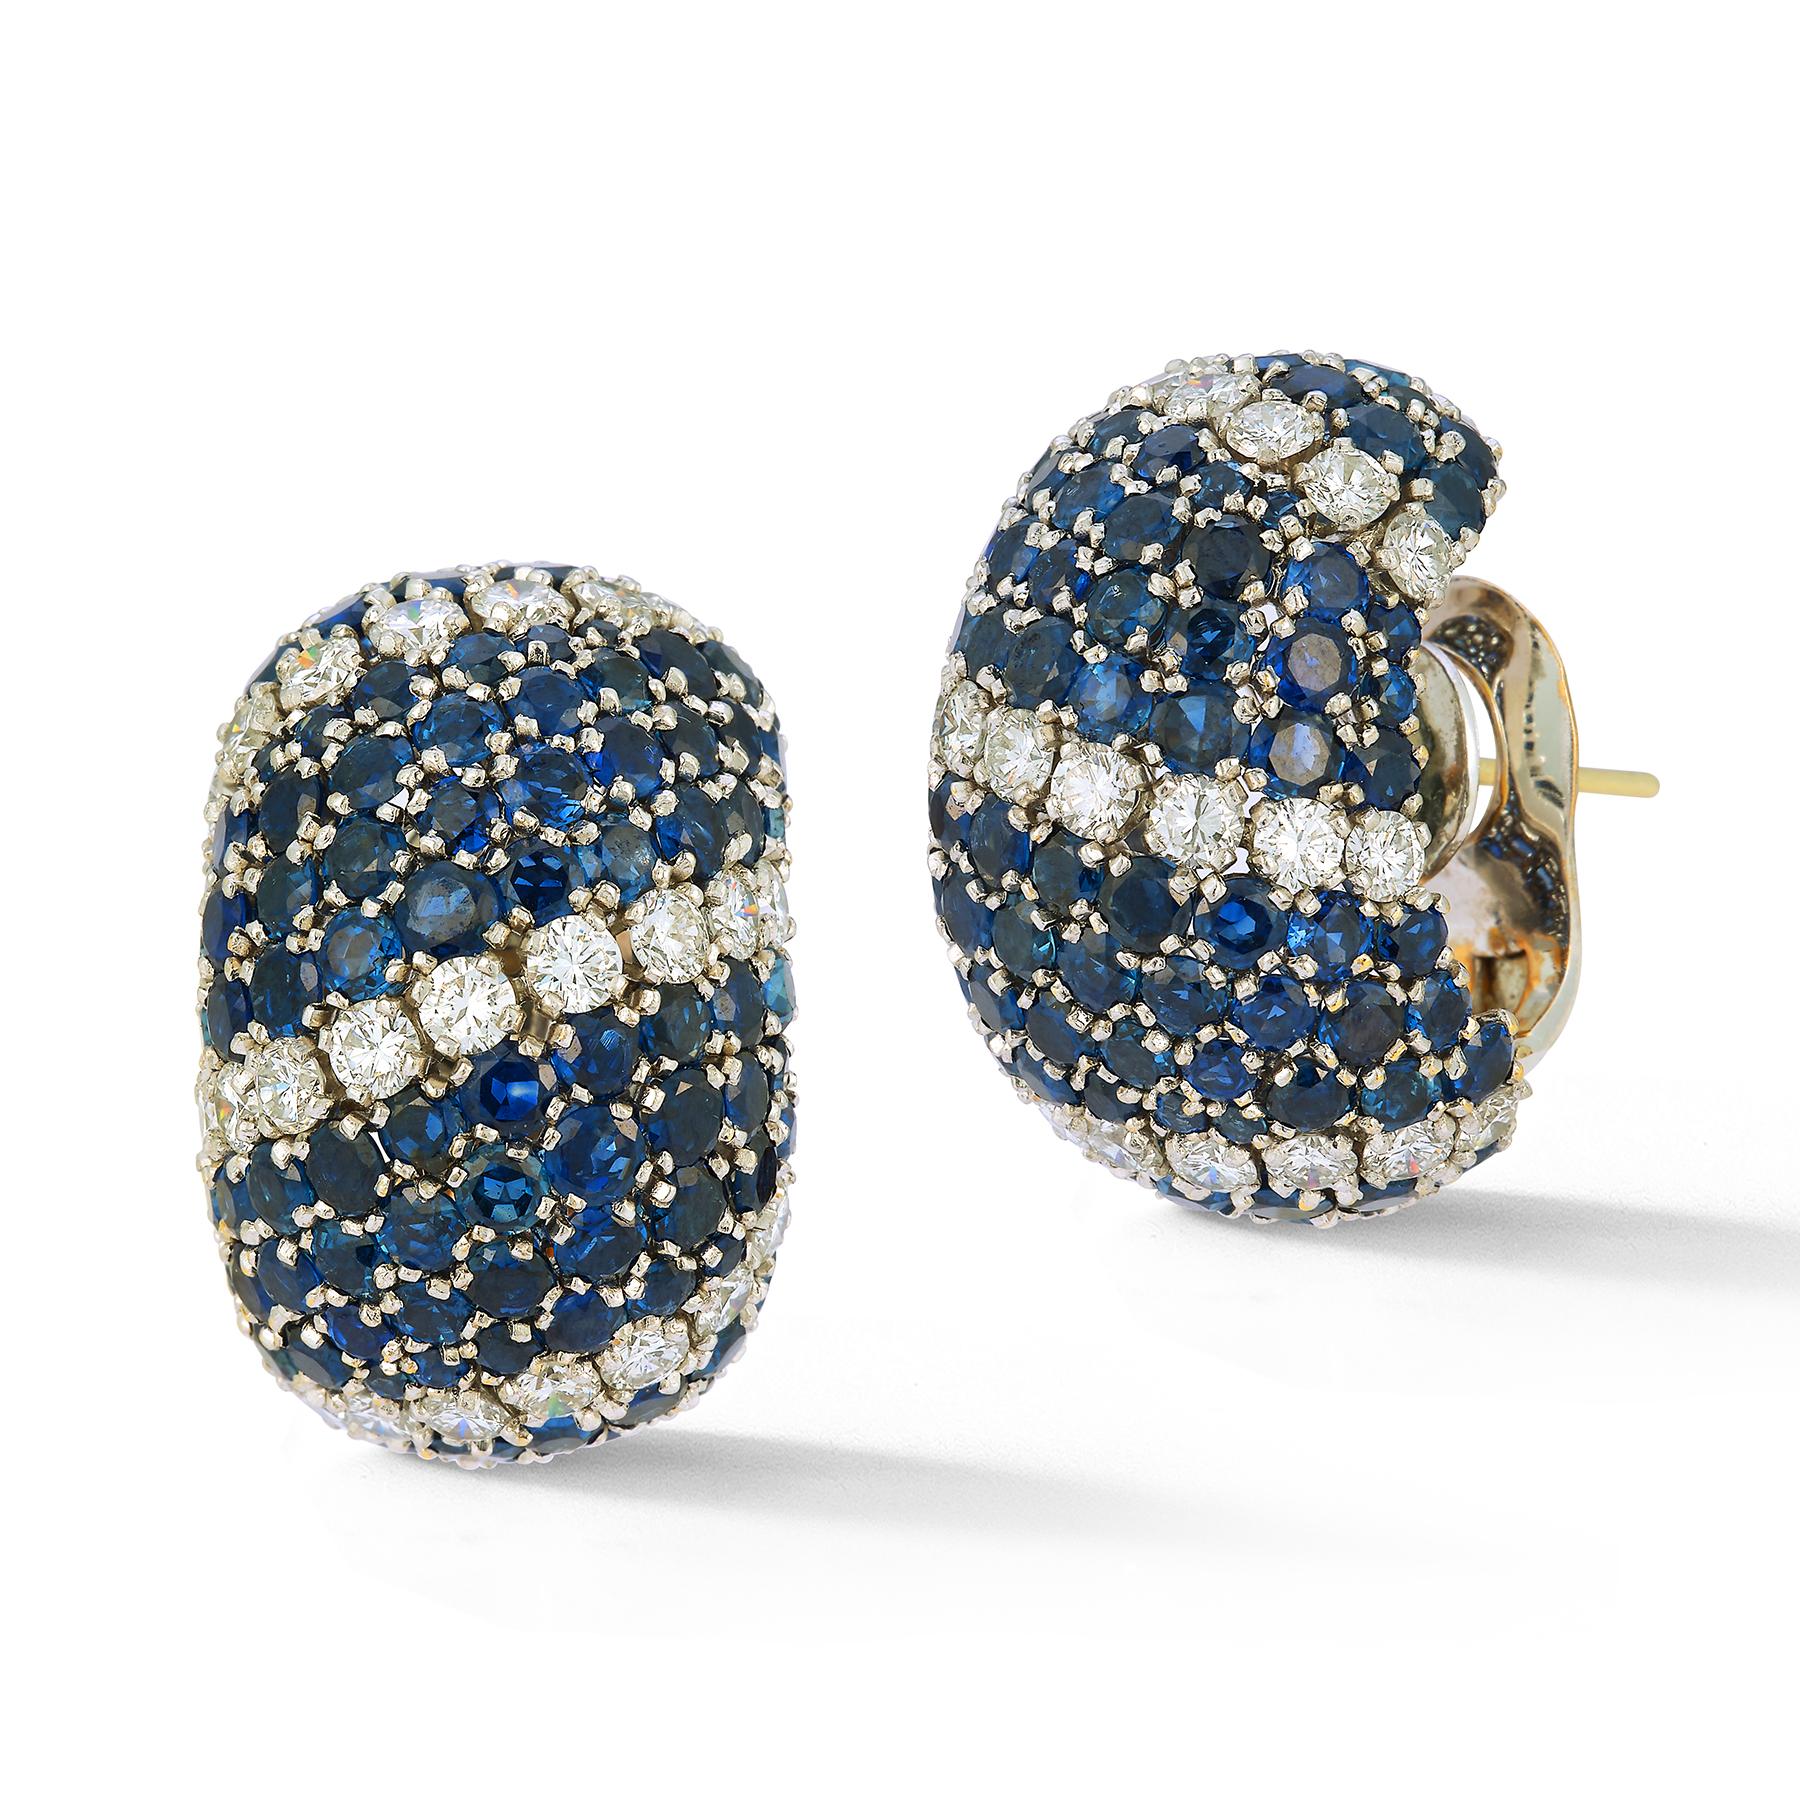 Van Cleef & Arpels Sapphire & Diamond Earrings

Round cut sapphires & diamonds set in 18k white gold.

Measurements: 1